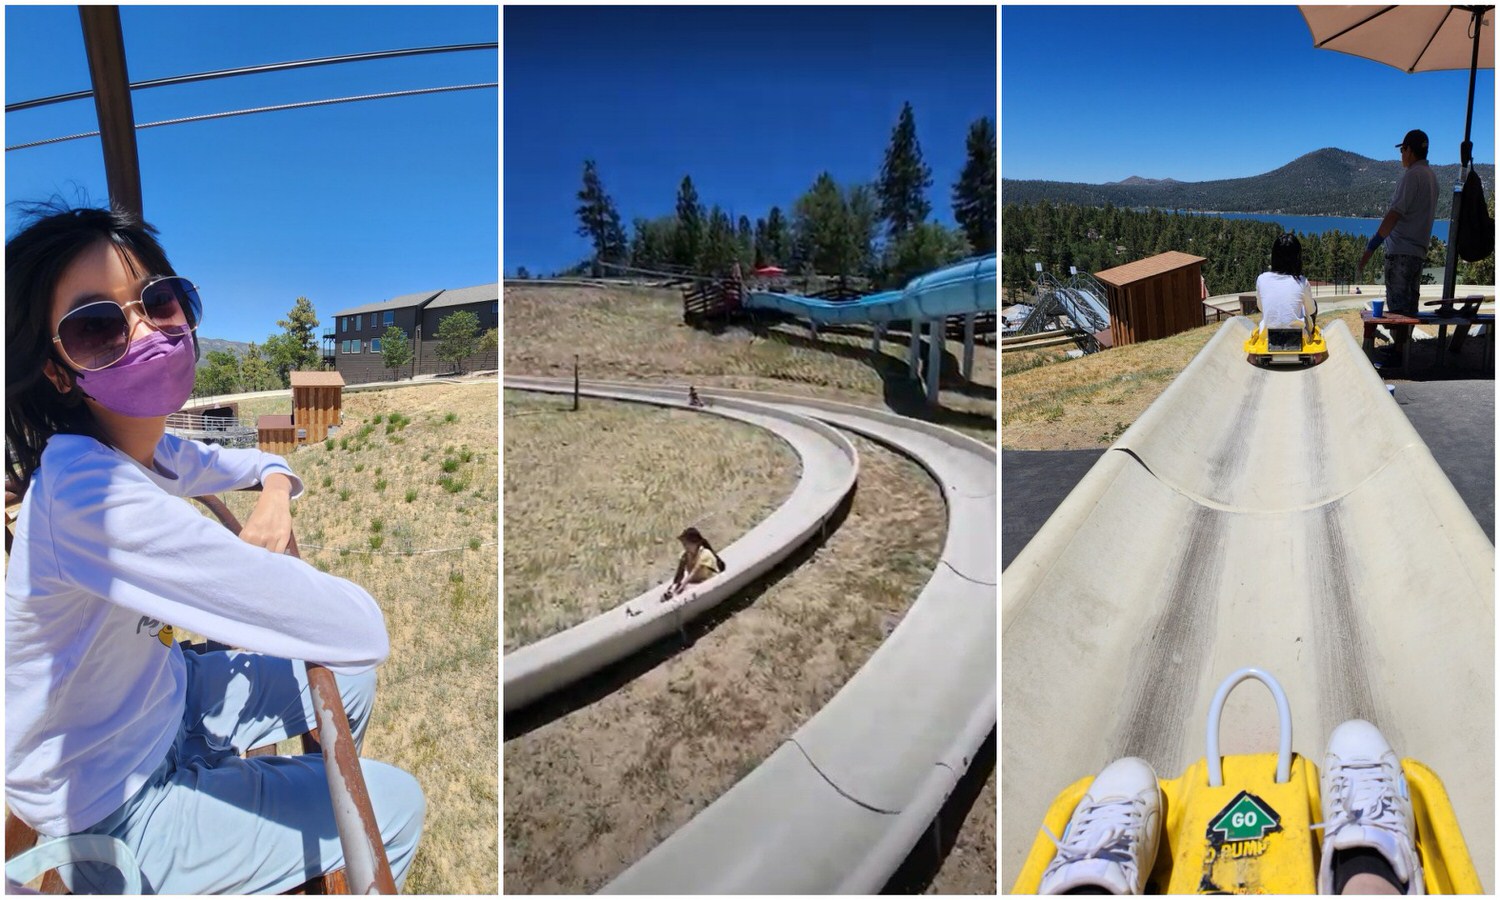 Alpine Slide at Magic Mountain 好玩的斜坡滑車與軌道車